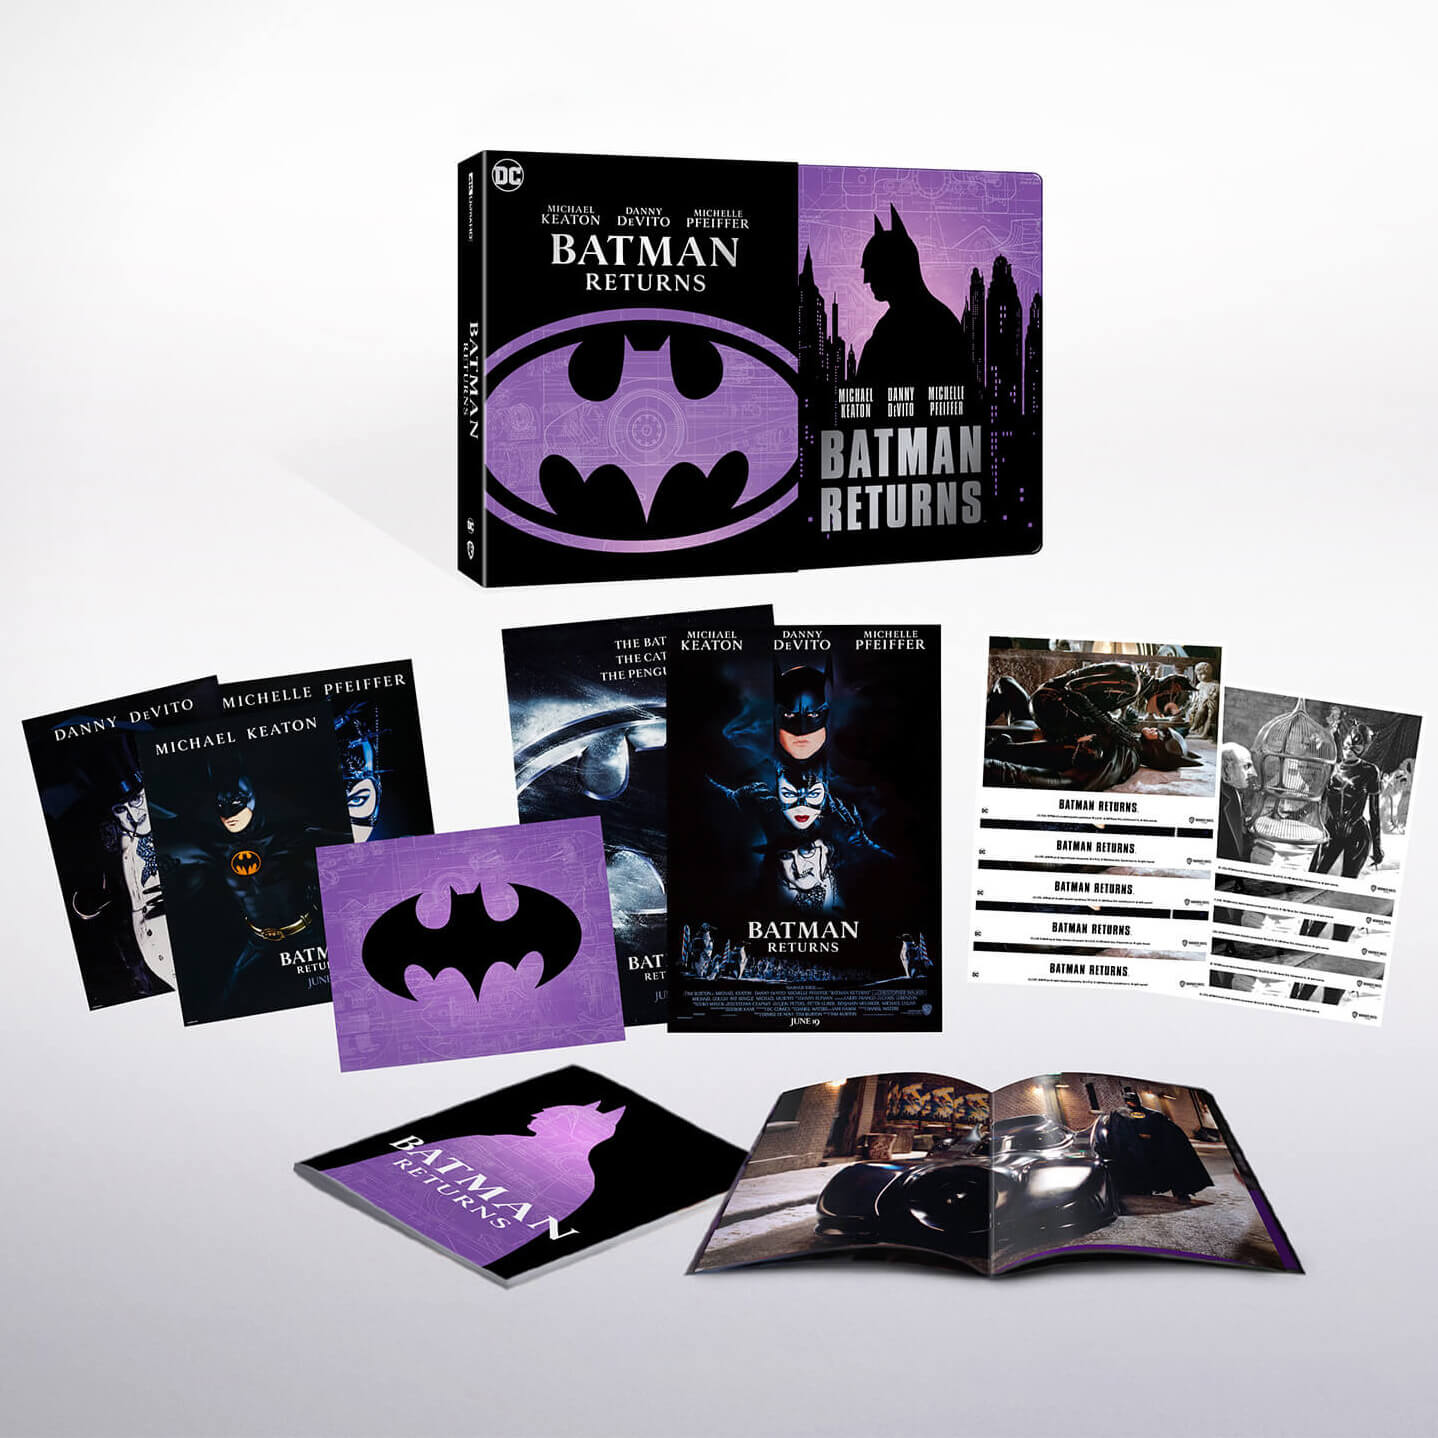 Batman Returns Ultimate Collector's Edition 4K Ultra HD Steelbook